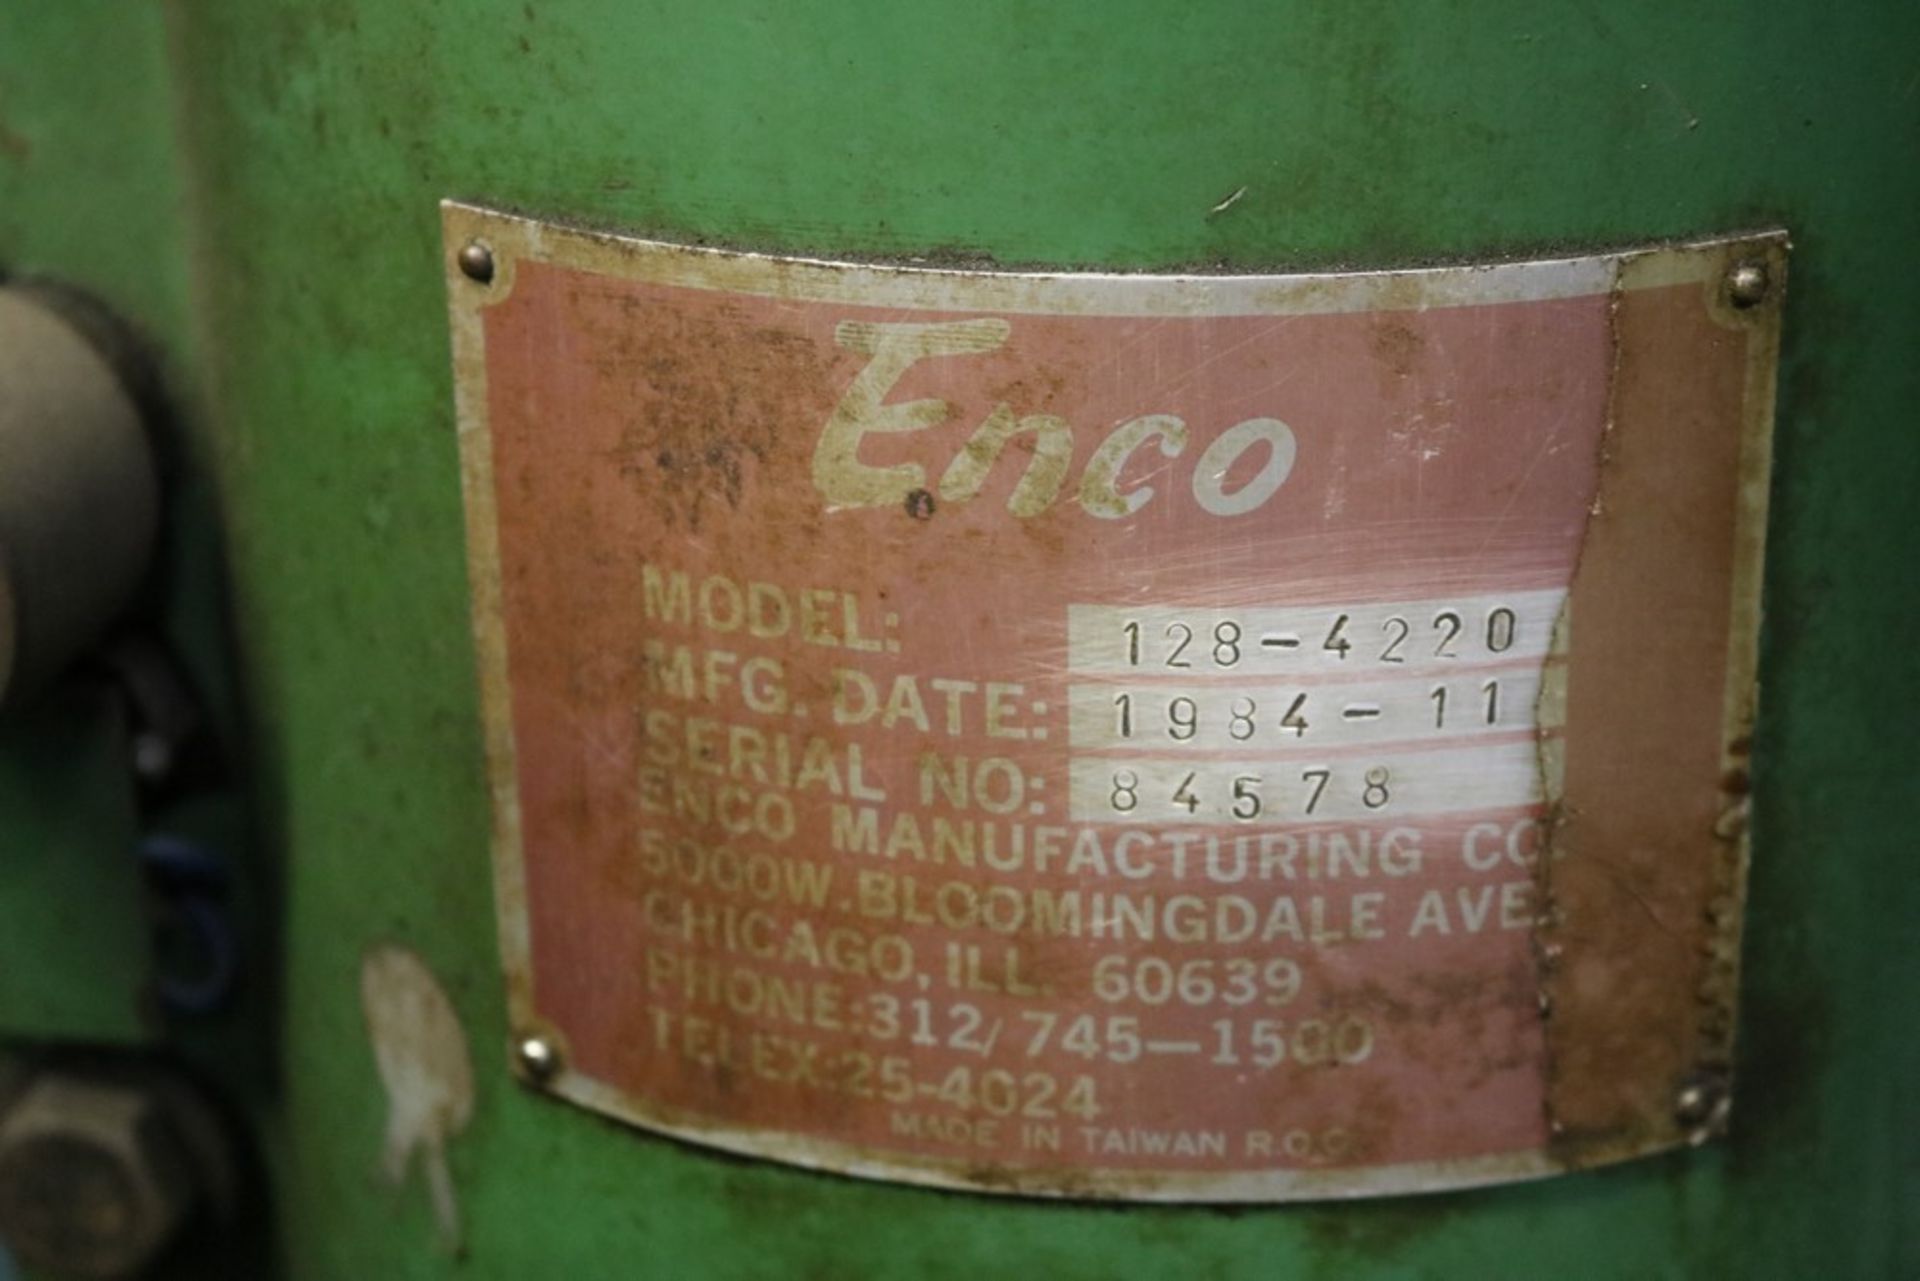 1984 Enco DSR-750S Drill Press Model 128-4220 SN 84578 - Image 6 of 7